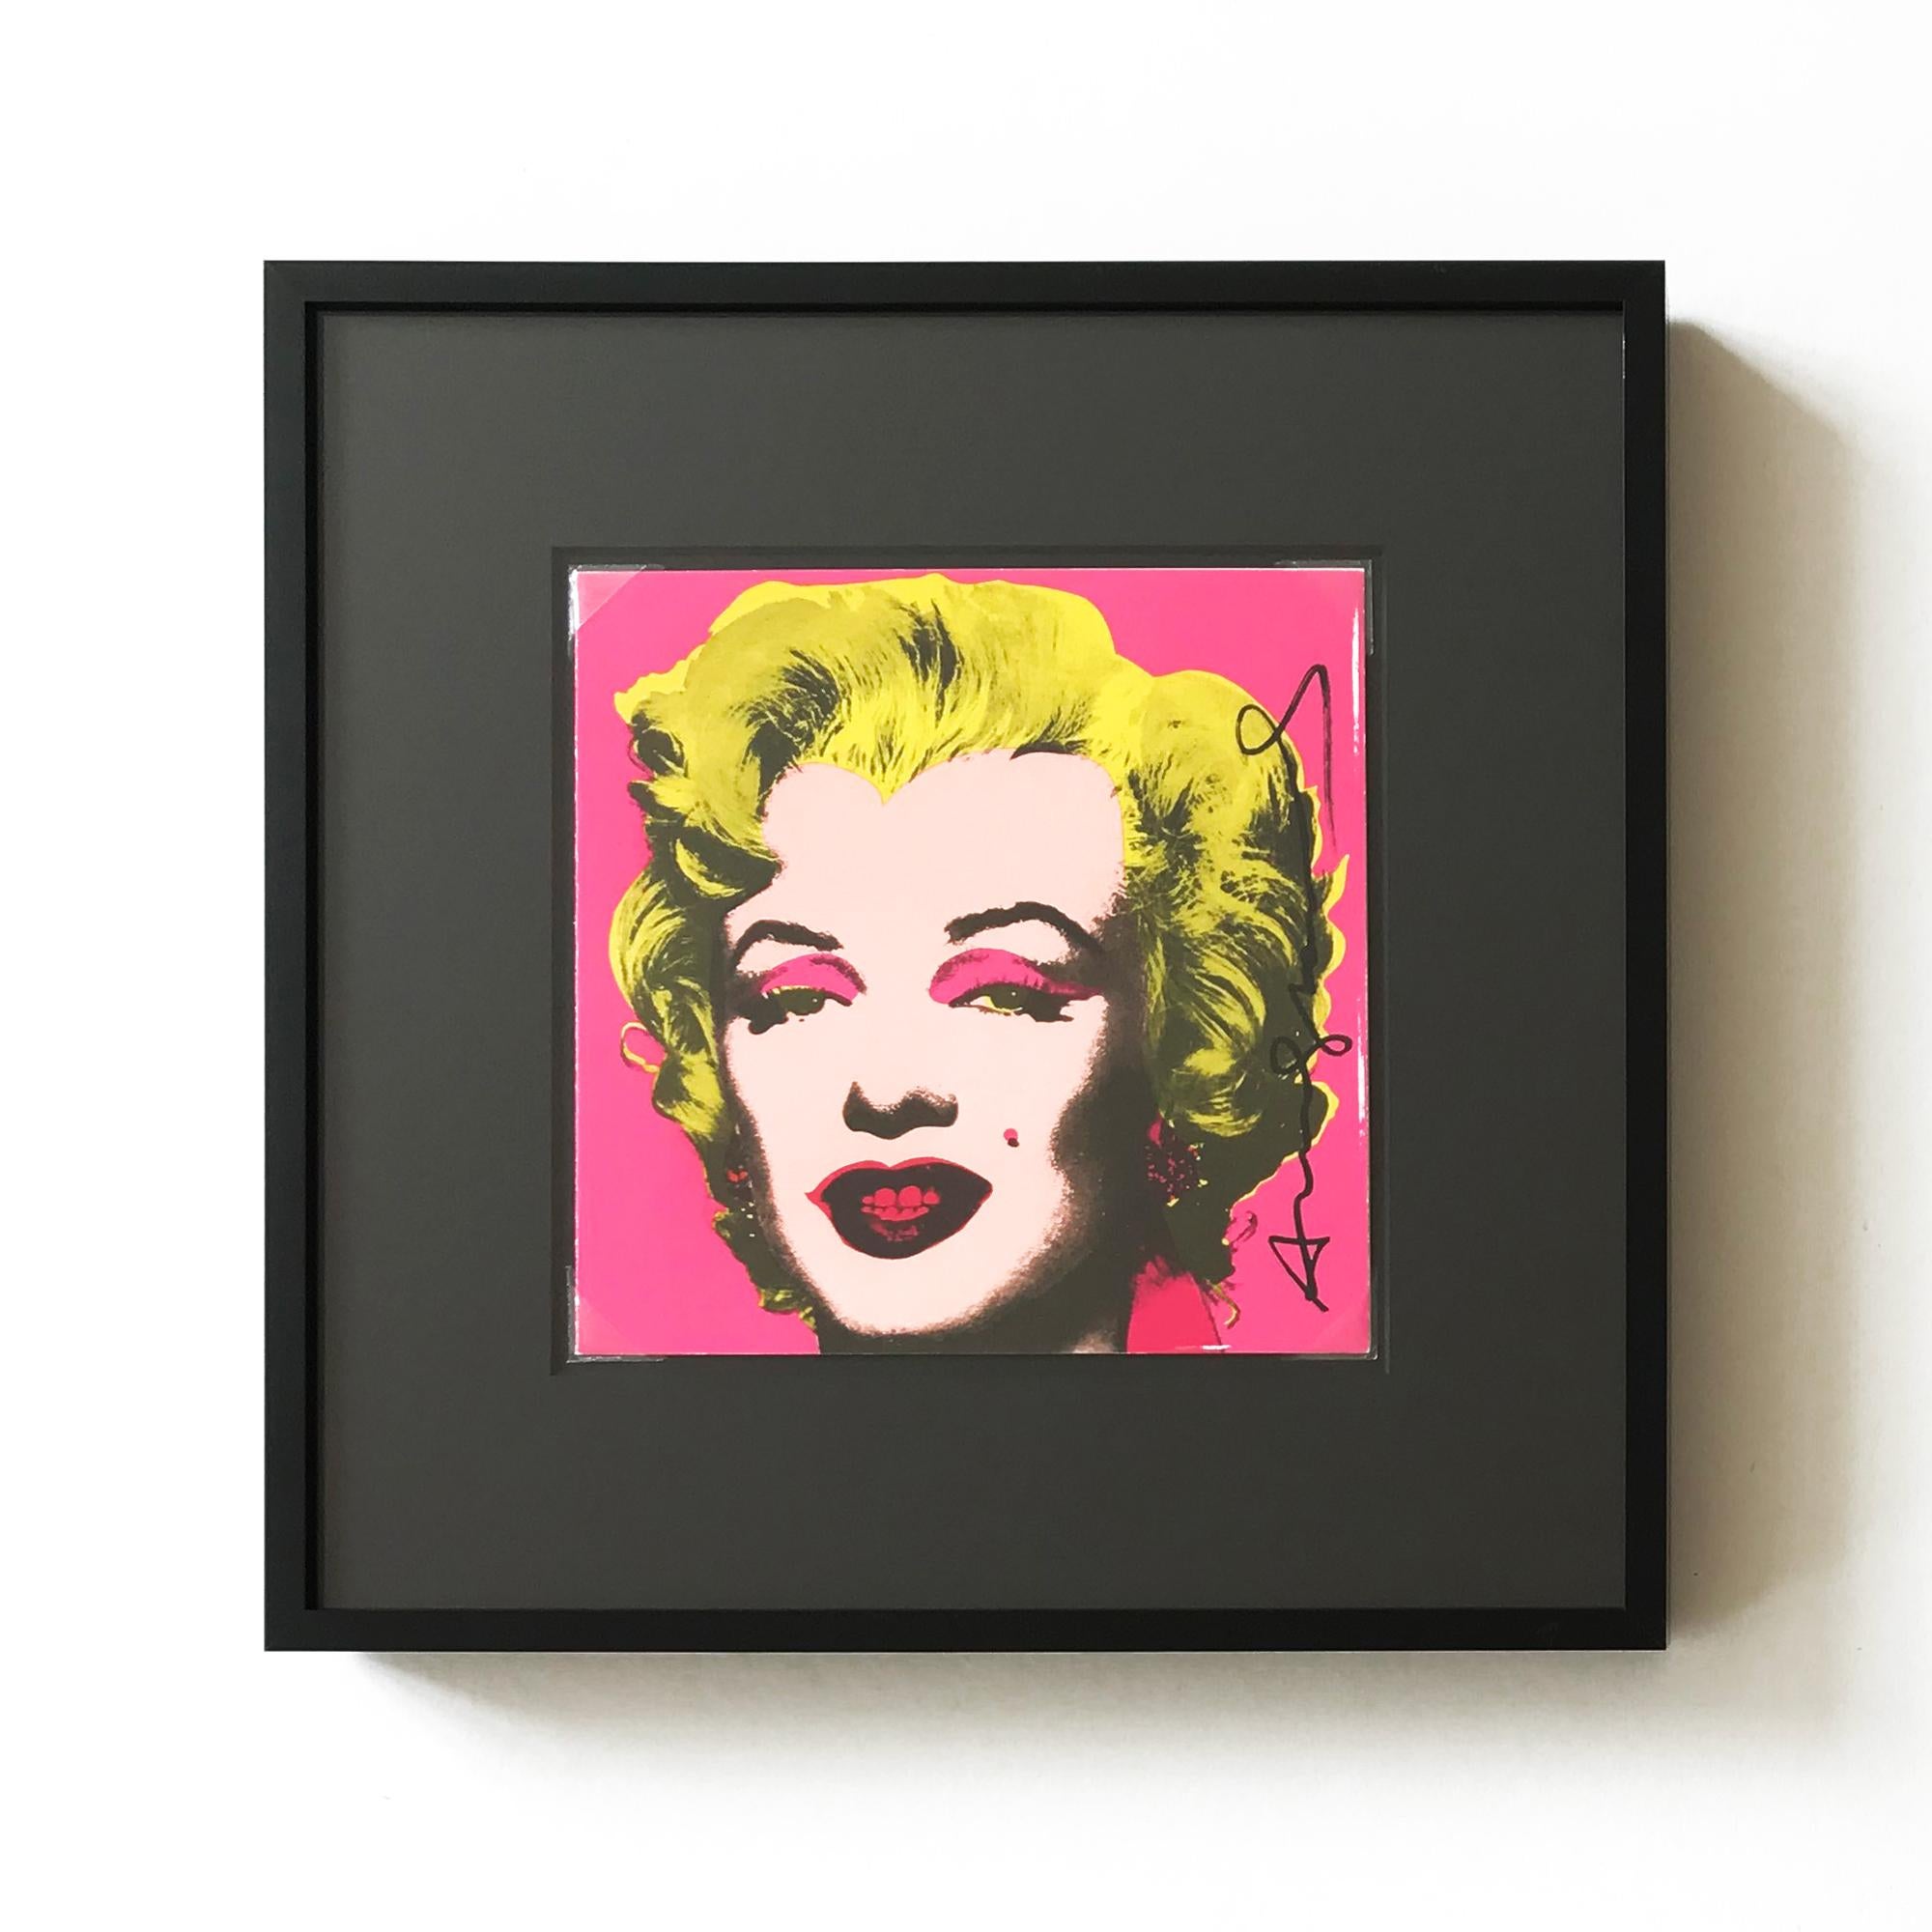 (after) Andy Warhol Portrait Print - Marilyn, Castelli Graphics Invitation, Pop Art, American Artist, 20th Century